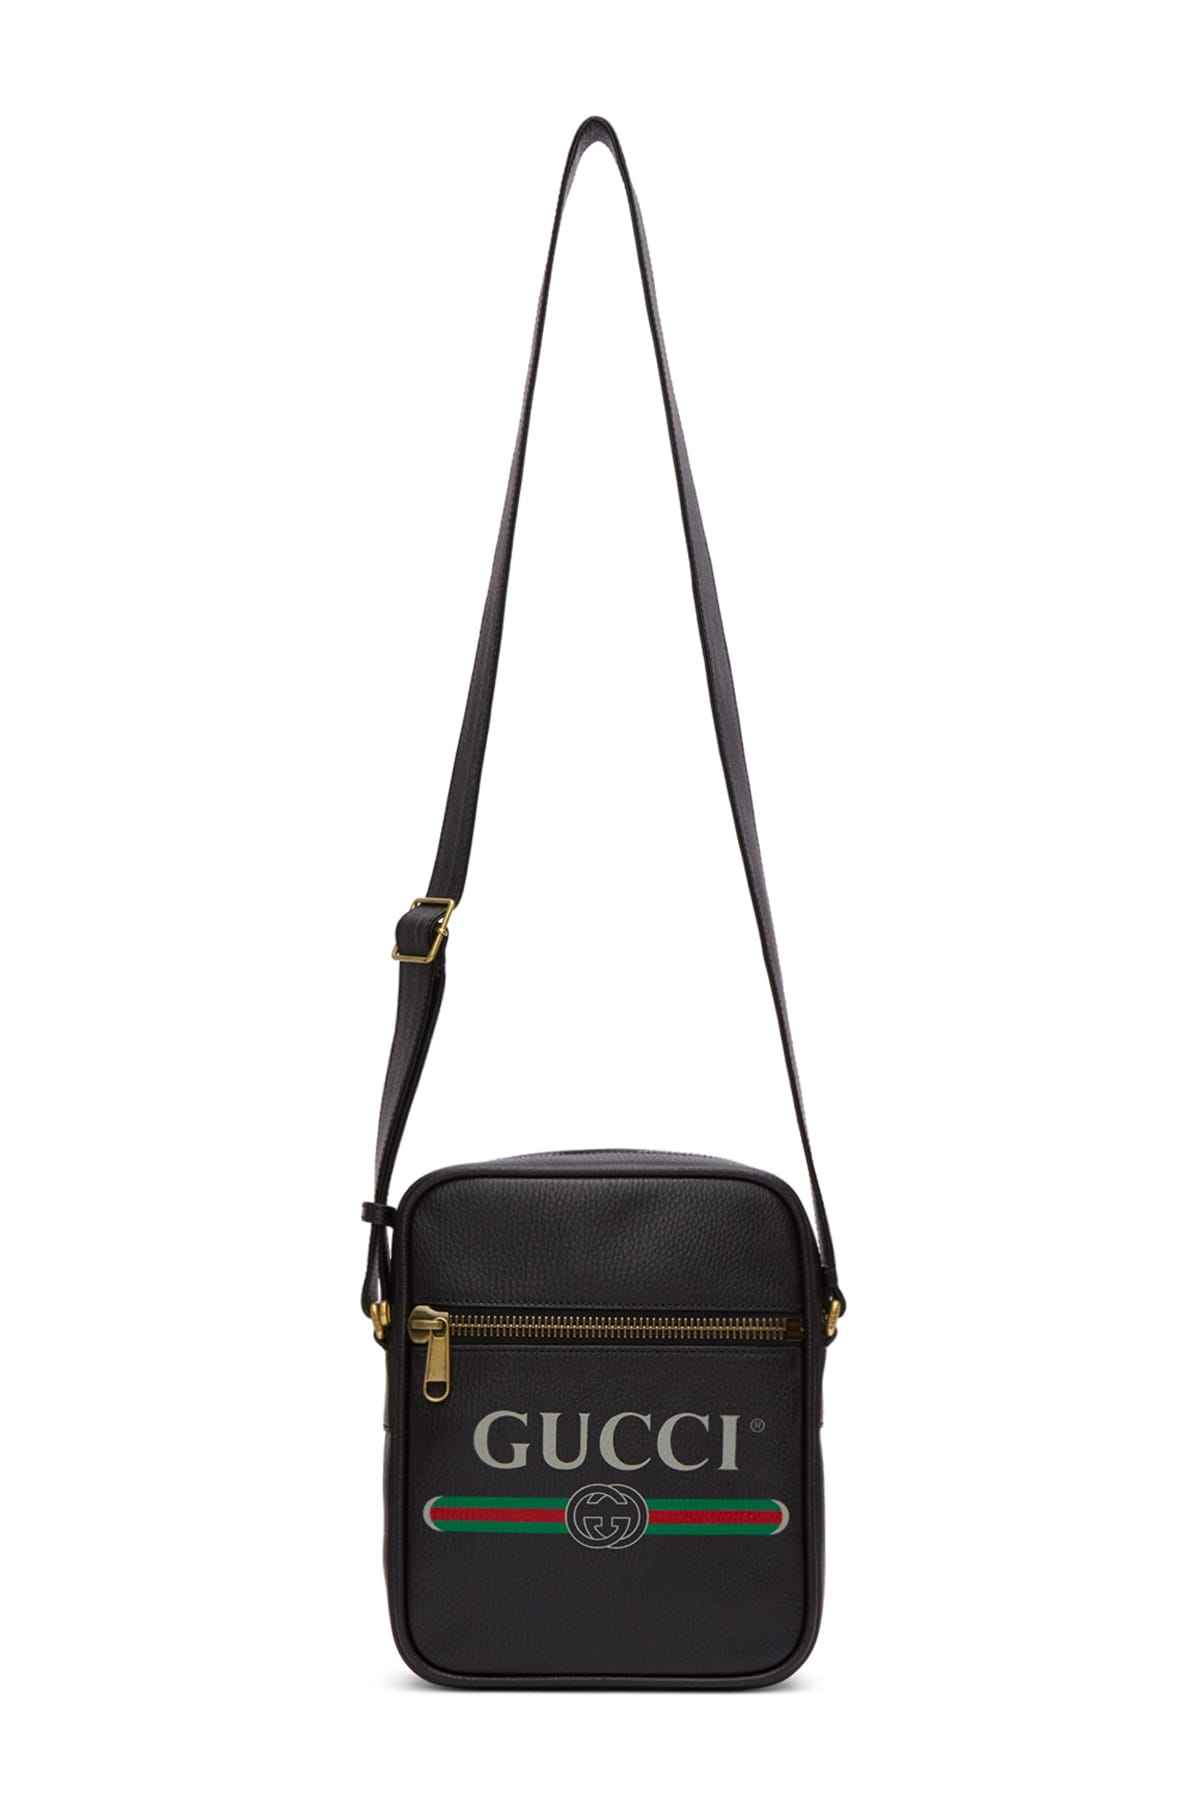 Gucci Logo Messenger Bag Release 